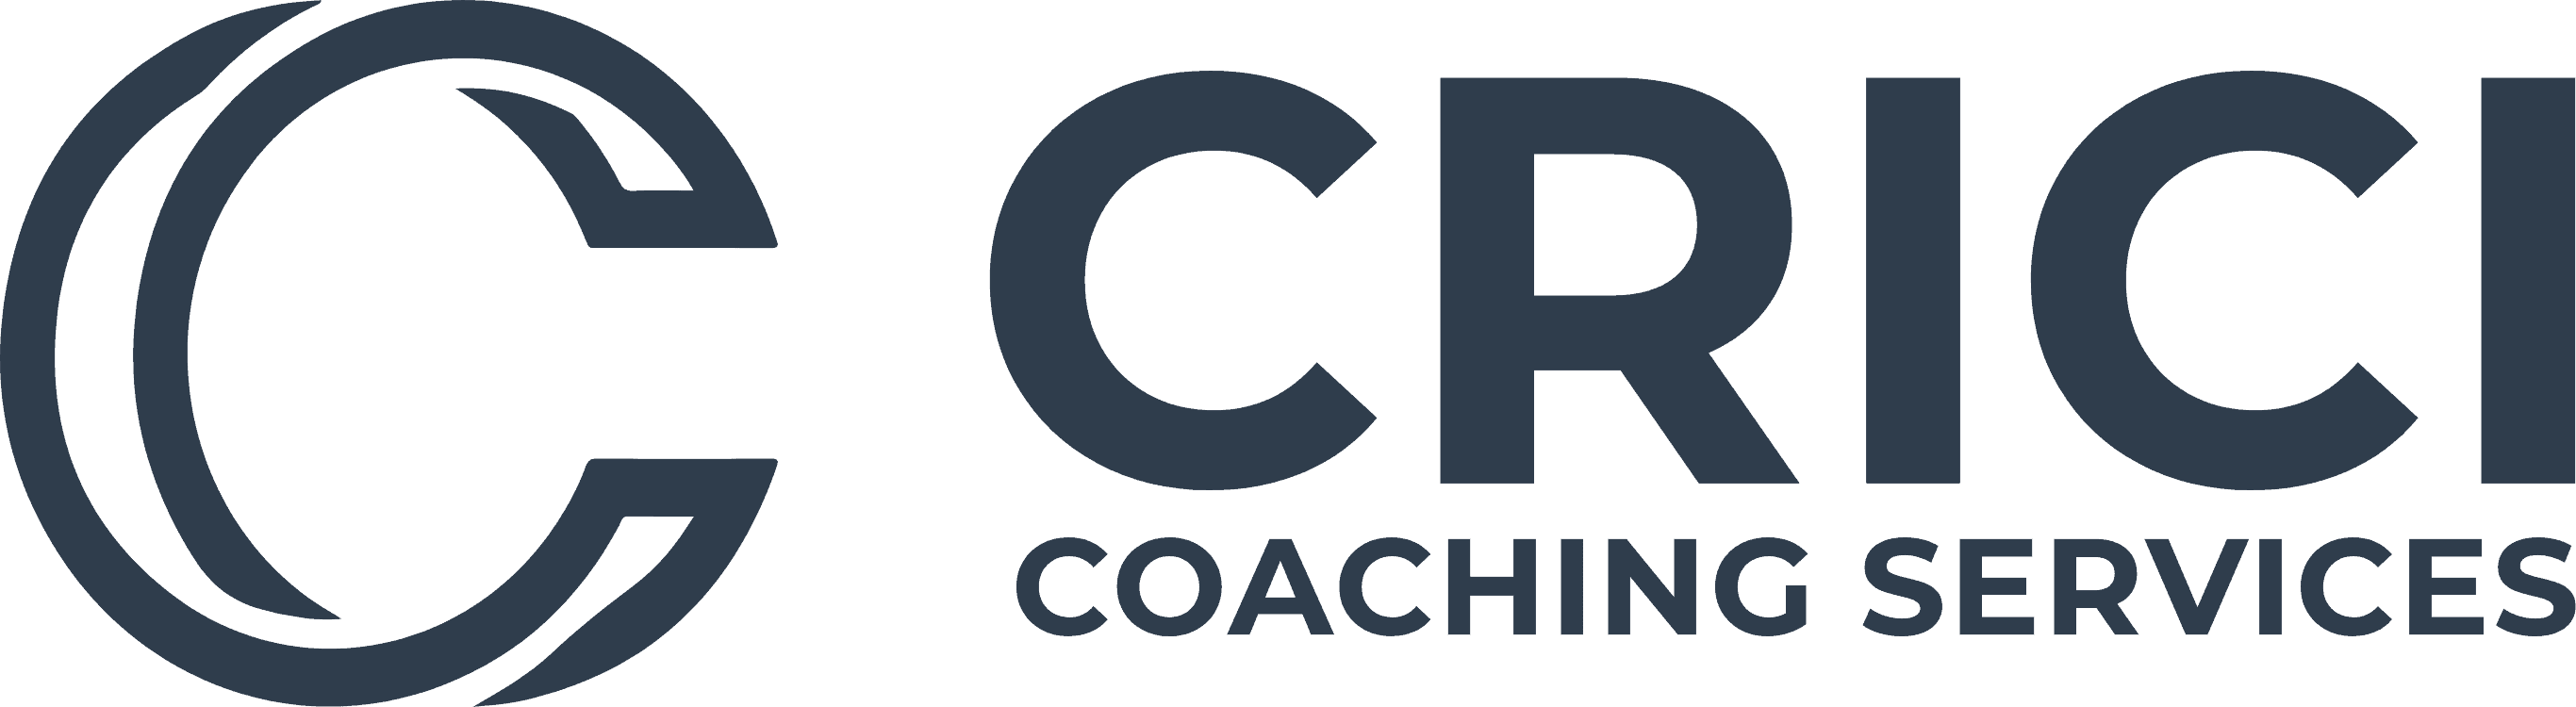 crici coaching services logo horizontal color v2